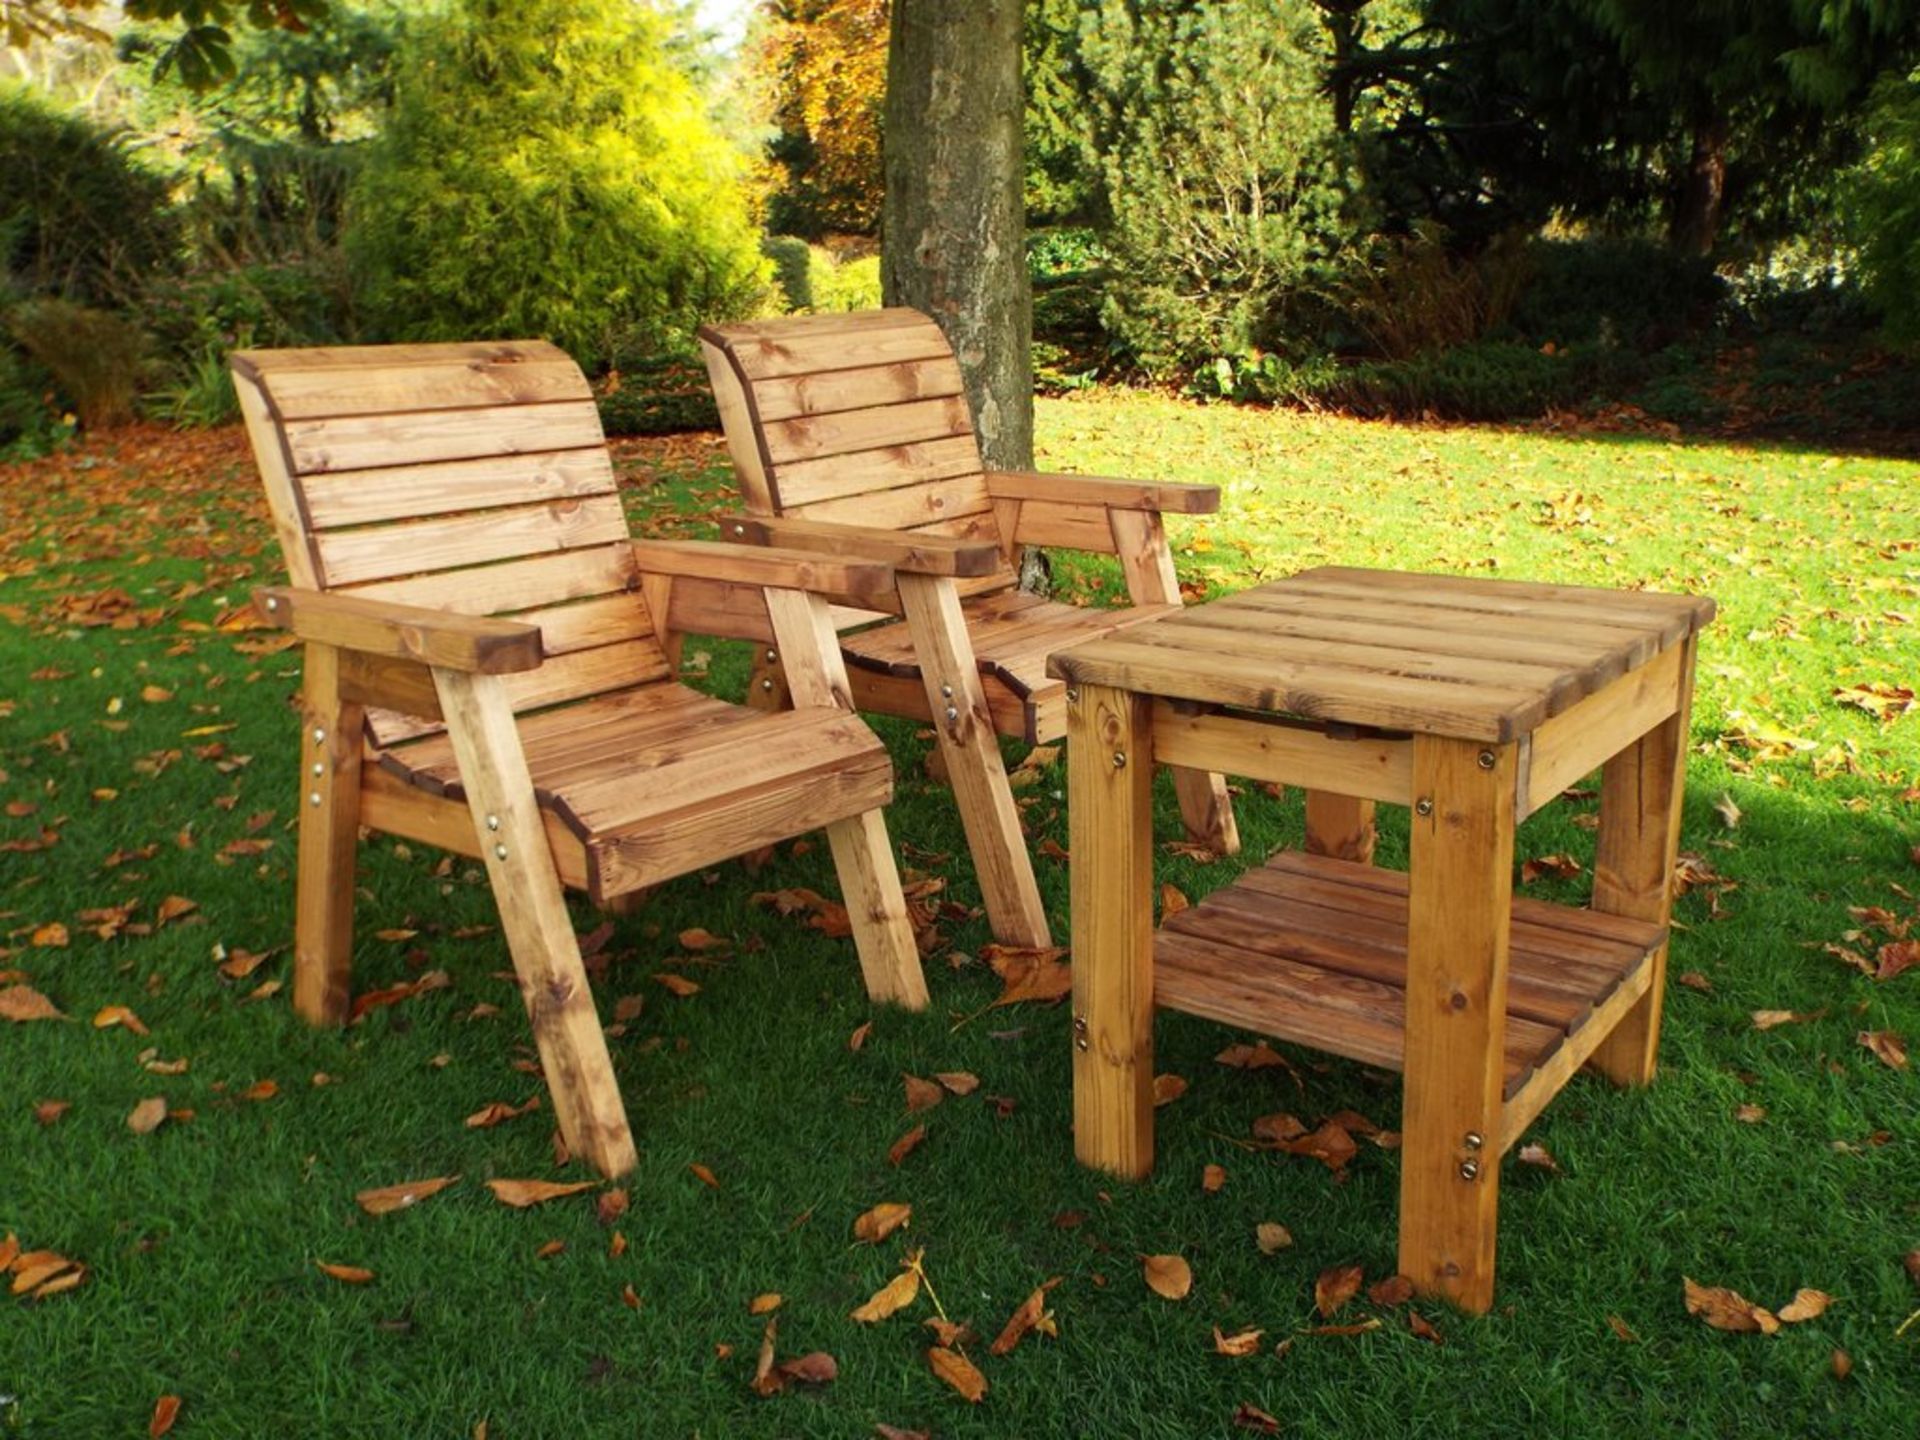 Deluxe Companion Set classic British design luxurious garden relaxation furniture superb outdoor set